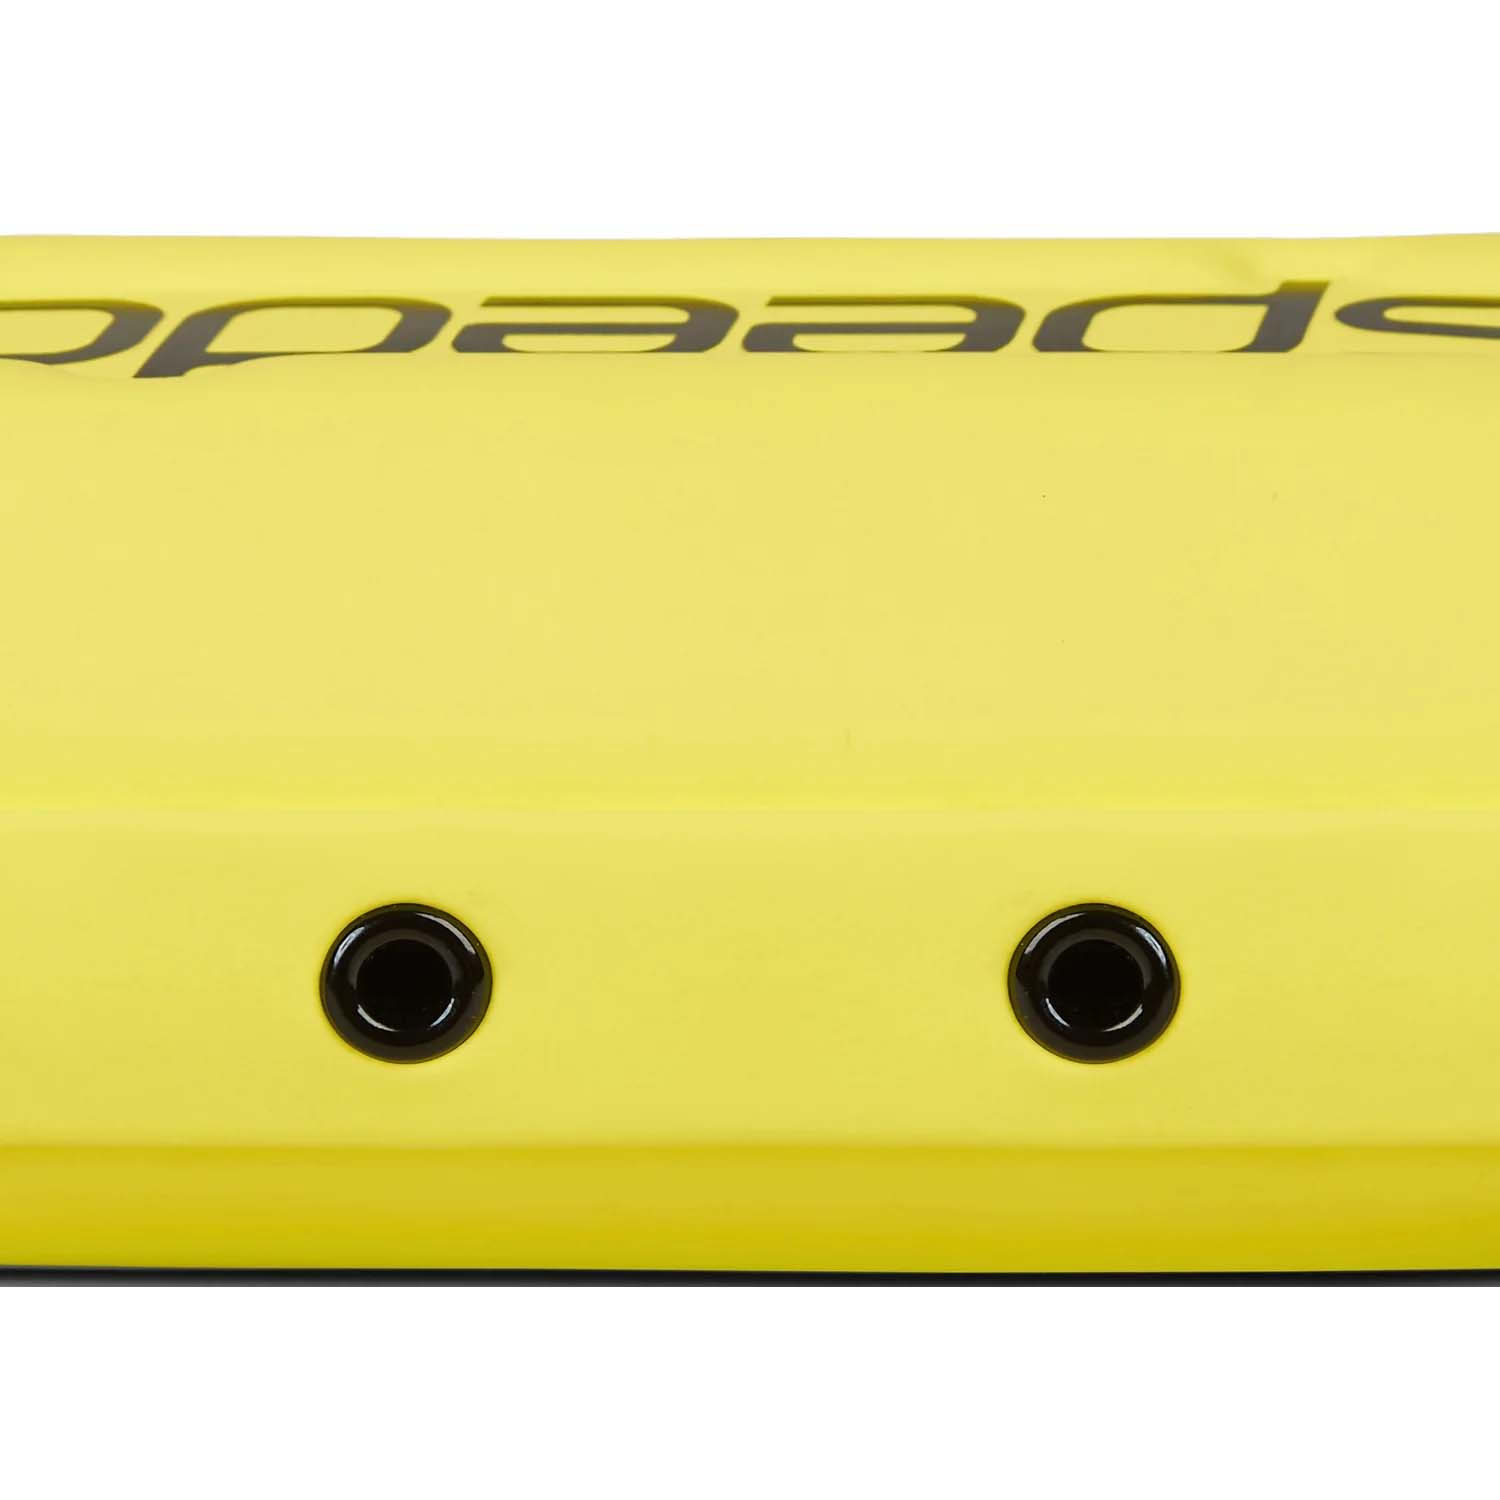 Чехол для очков для плавания Speedo Goggles Storage Yellow